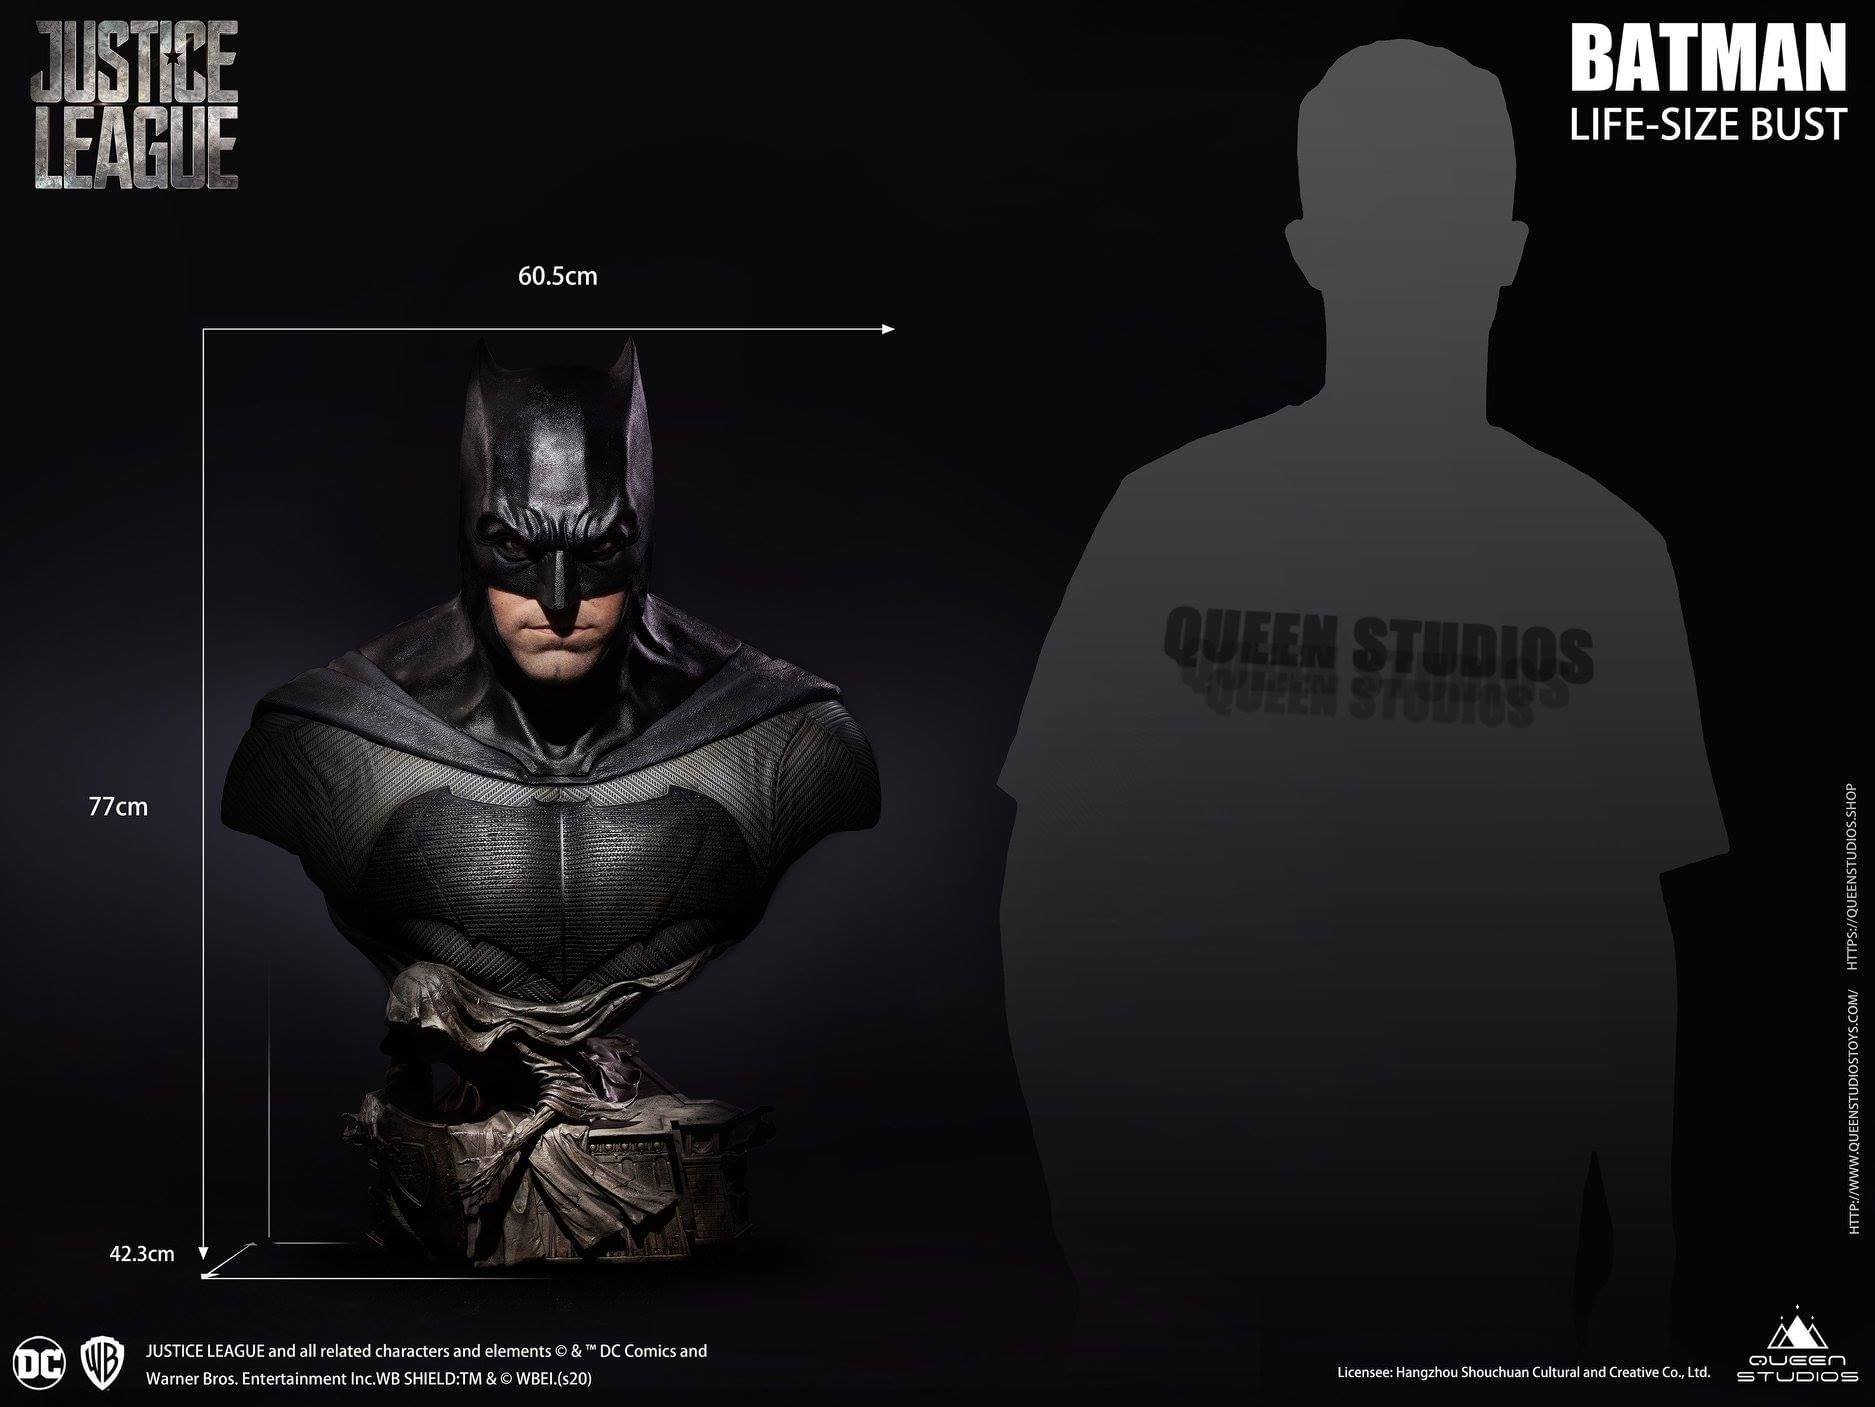 Justice League Life-Size Batman Statue from Queen Studios.